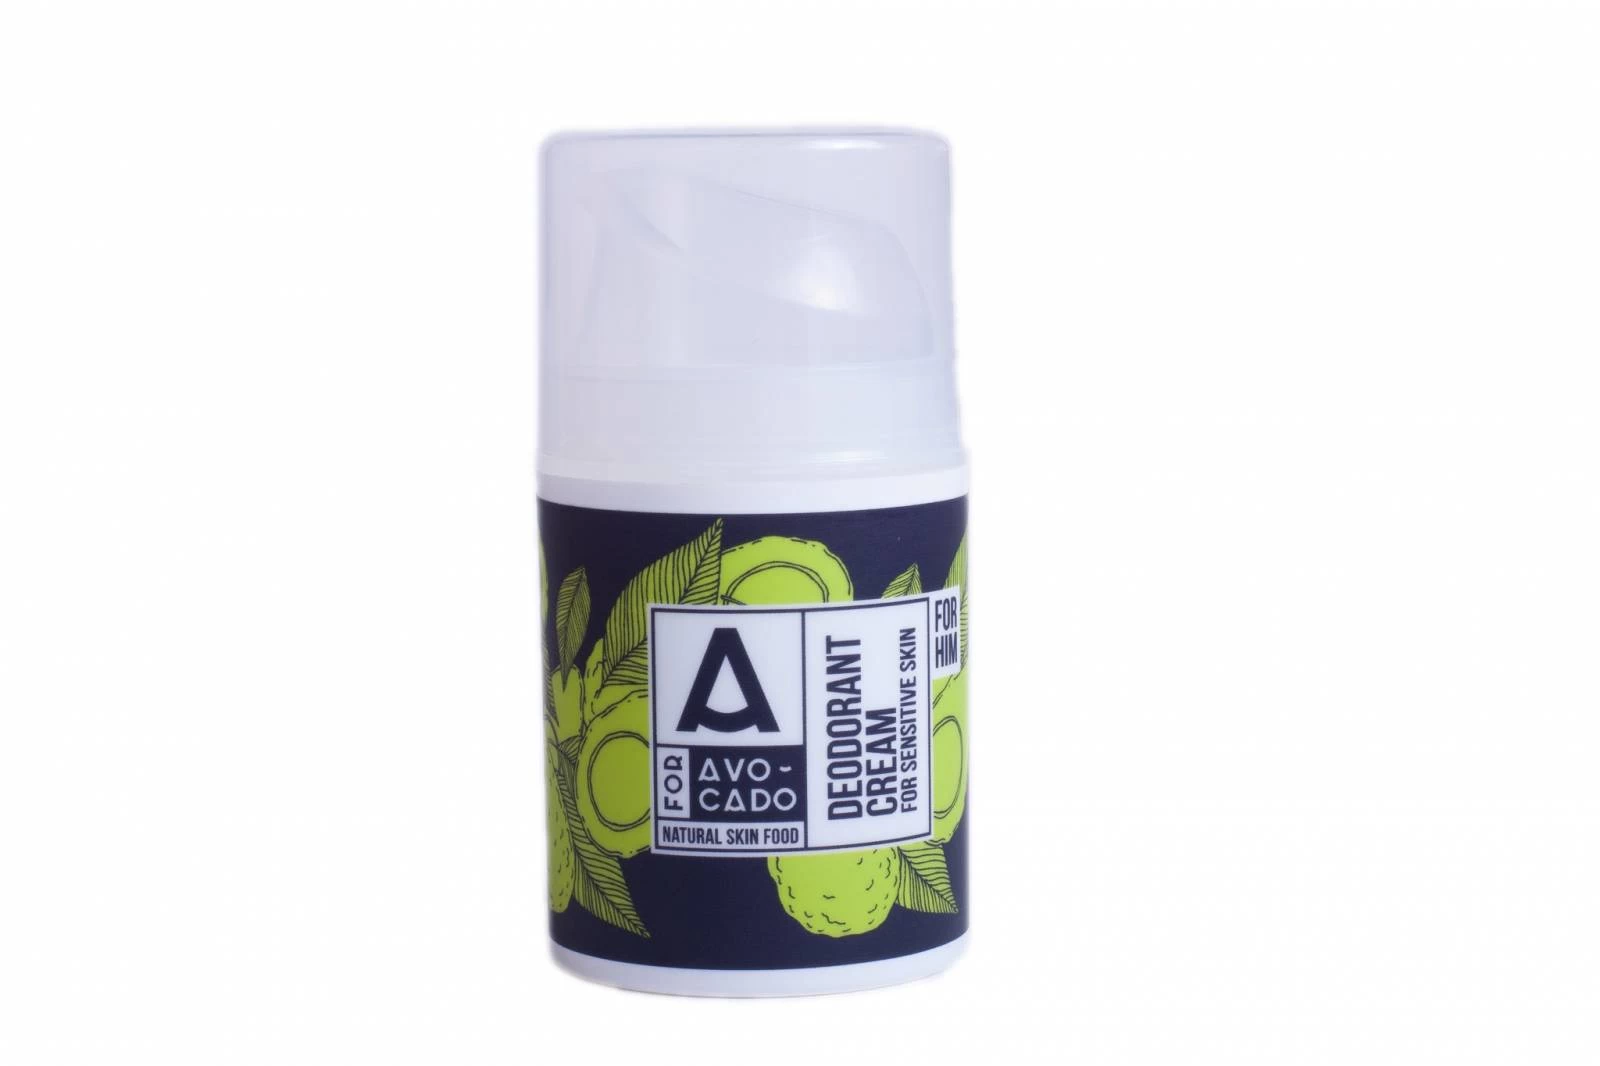 Deodorant crema pentru barbati, 30ml - a for avocado